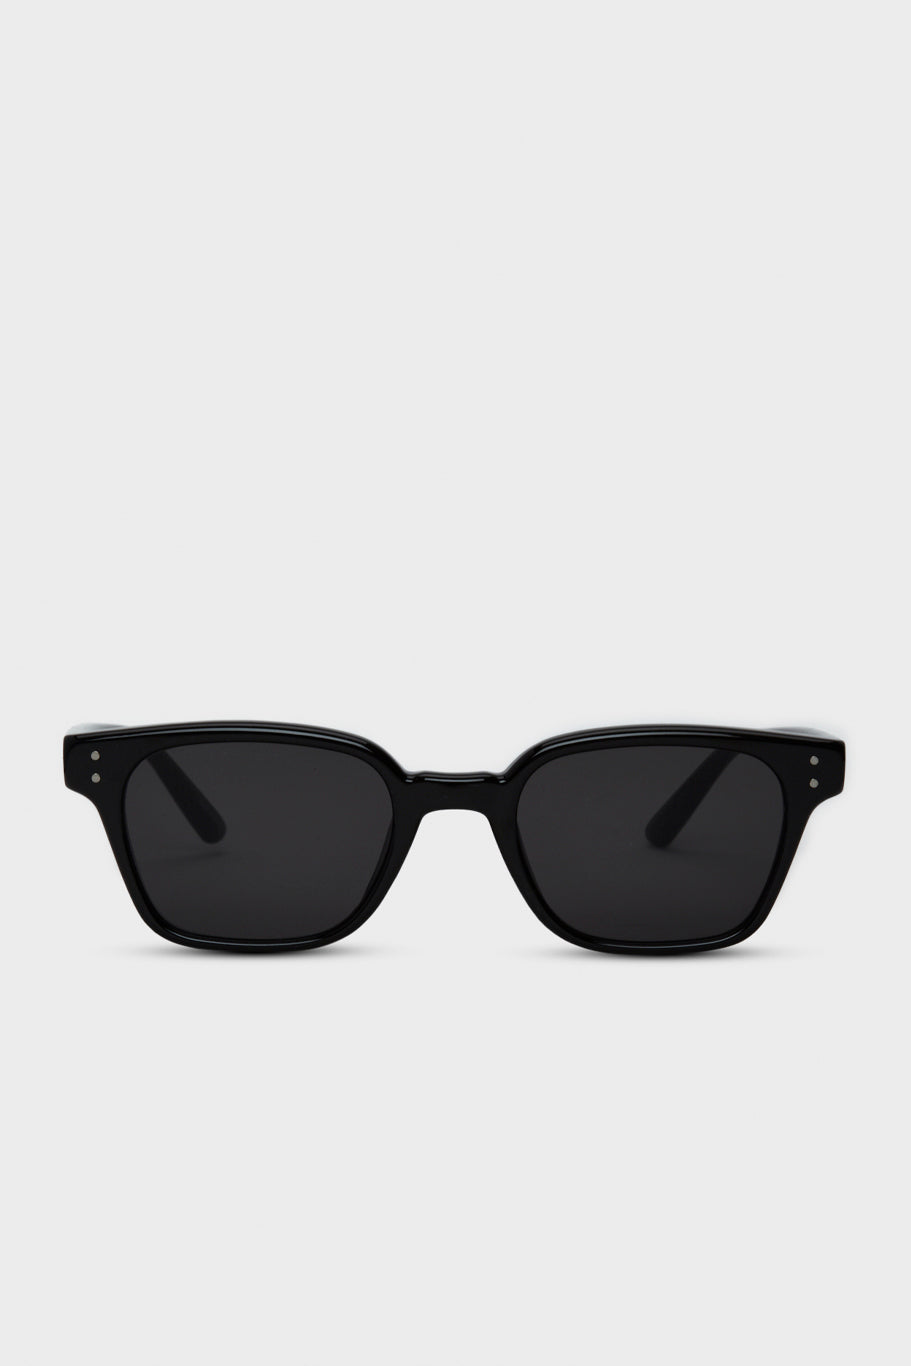 Black shaped frame black lens sunglasses_1